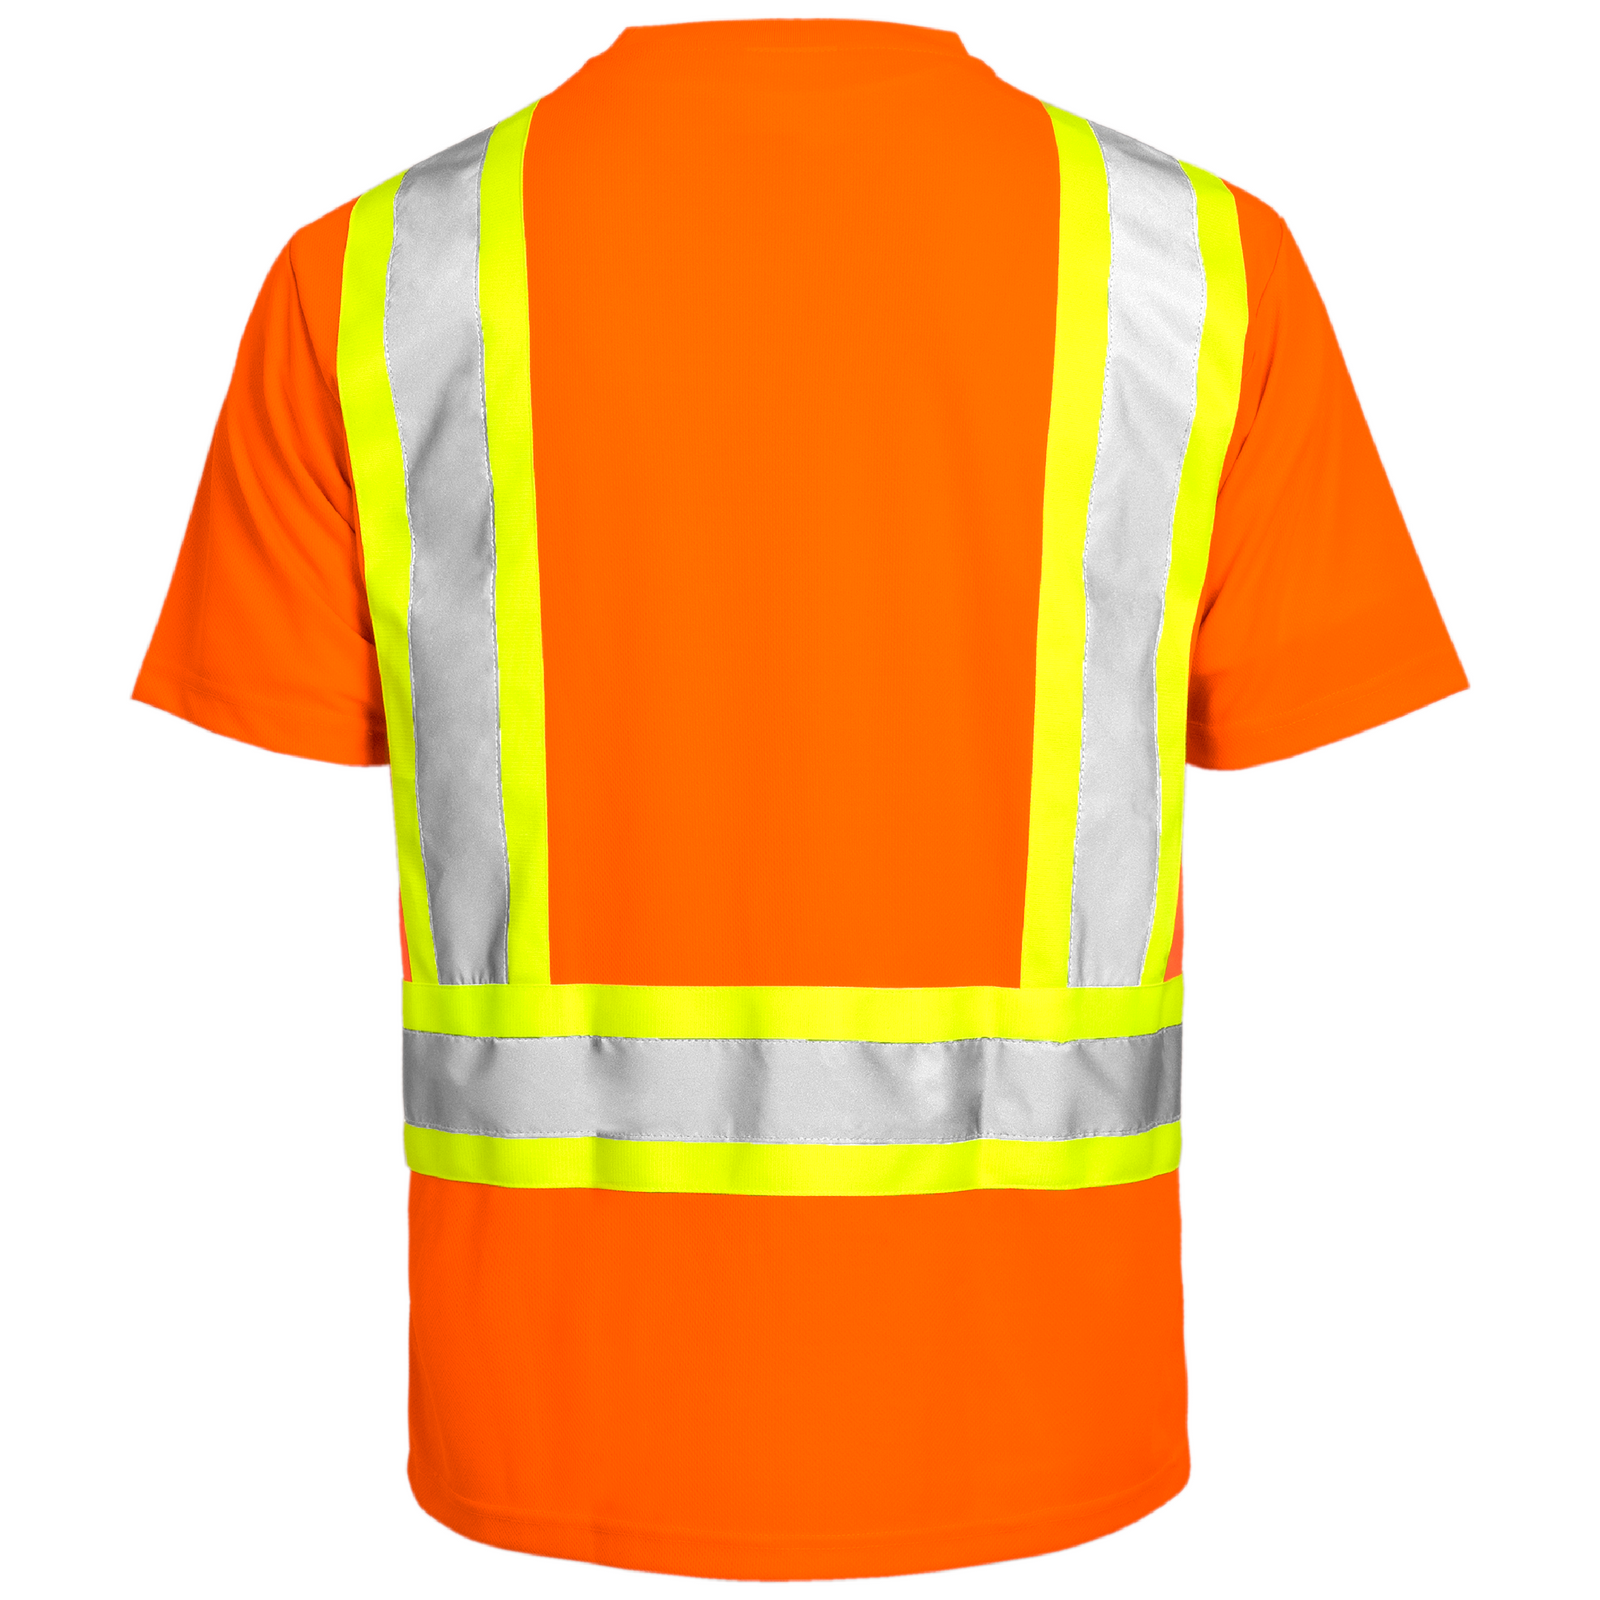 Short sleeve orange reflective work T shirt